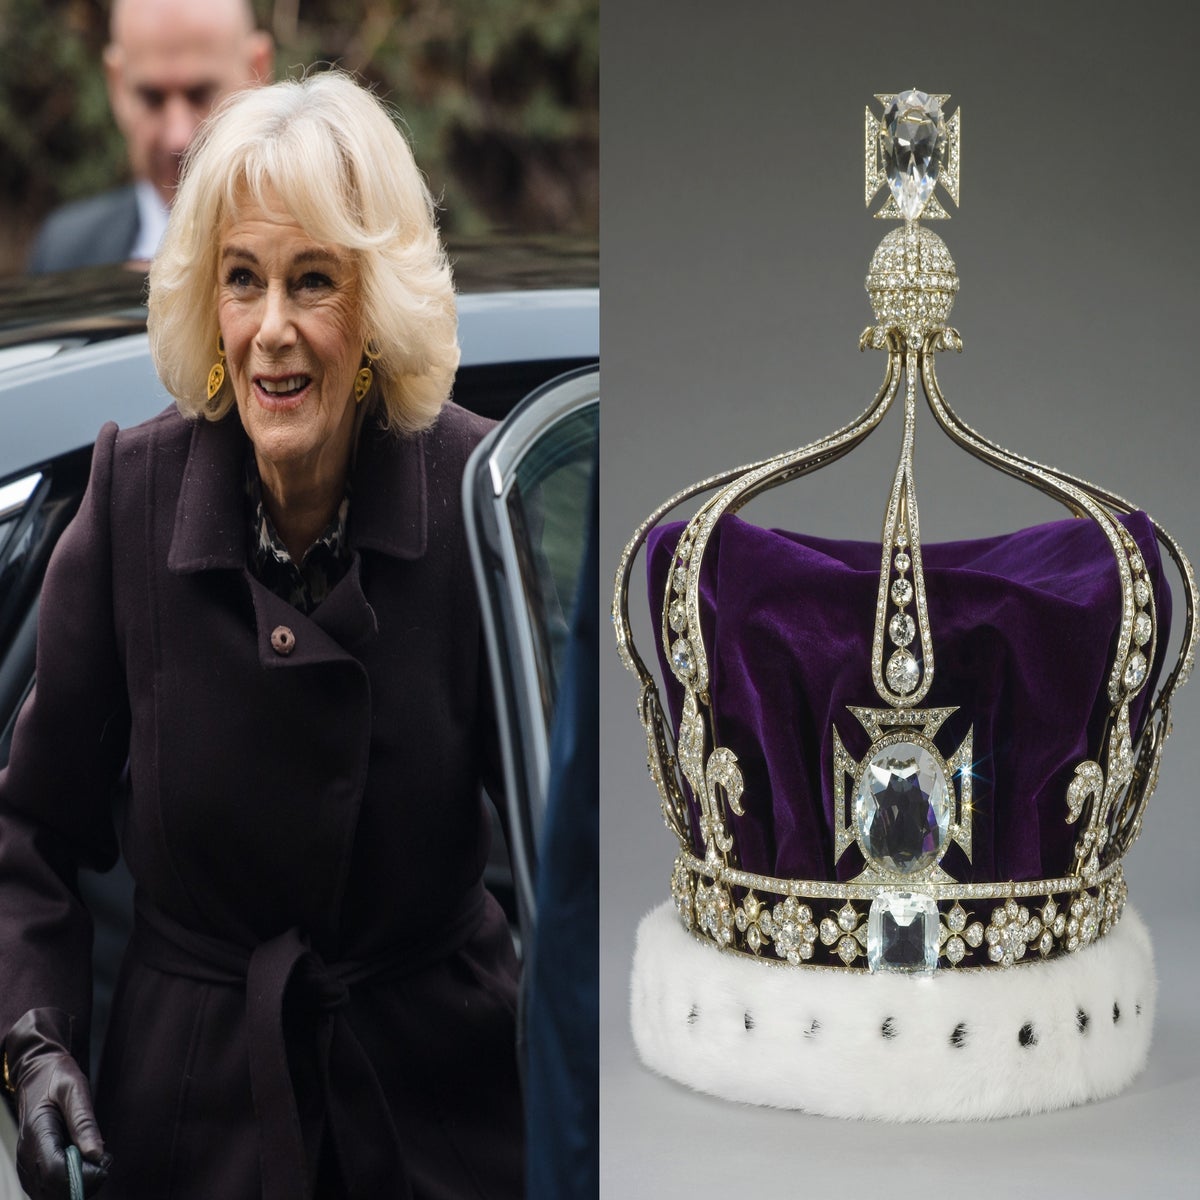 Royal Family: Will King Charles wear India's Kohinoor diamond on